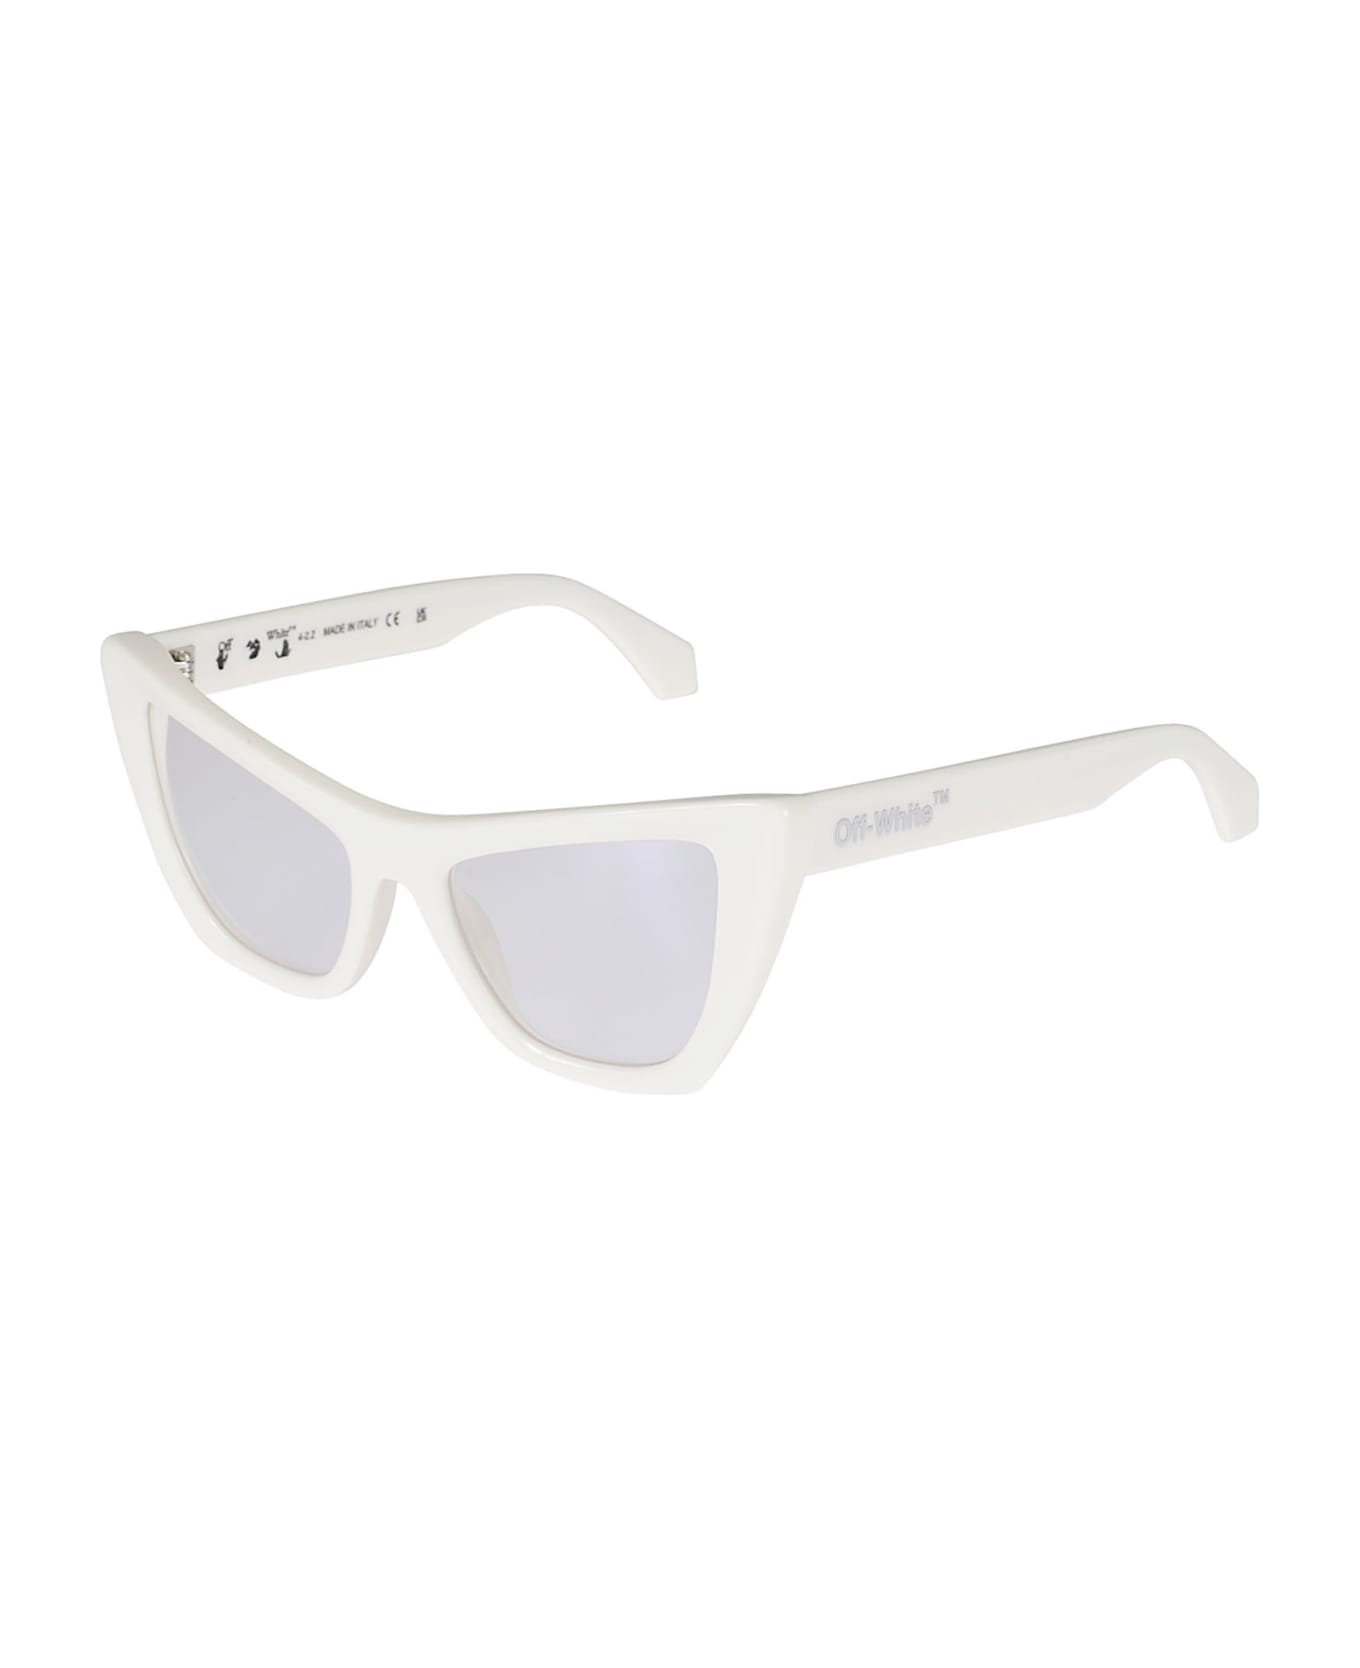 Off-White Optical Style 11 Glasses - White